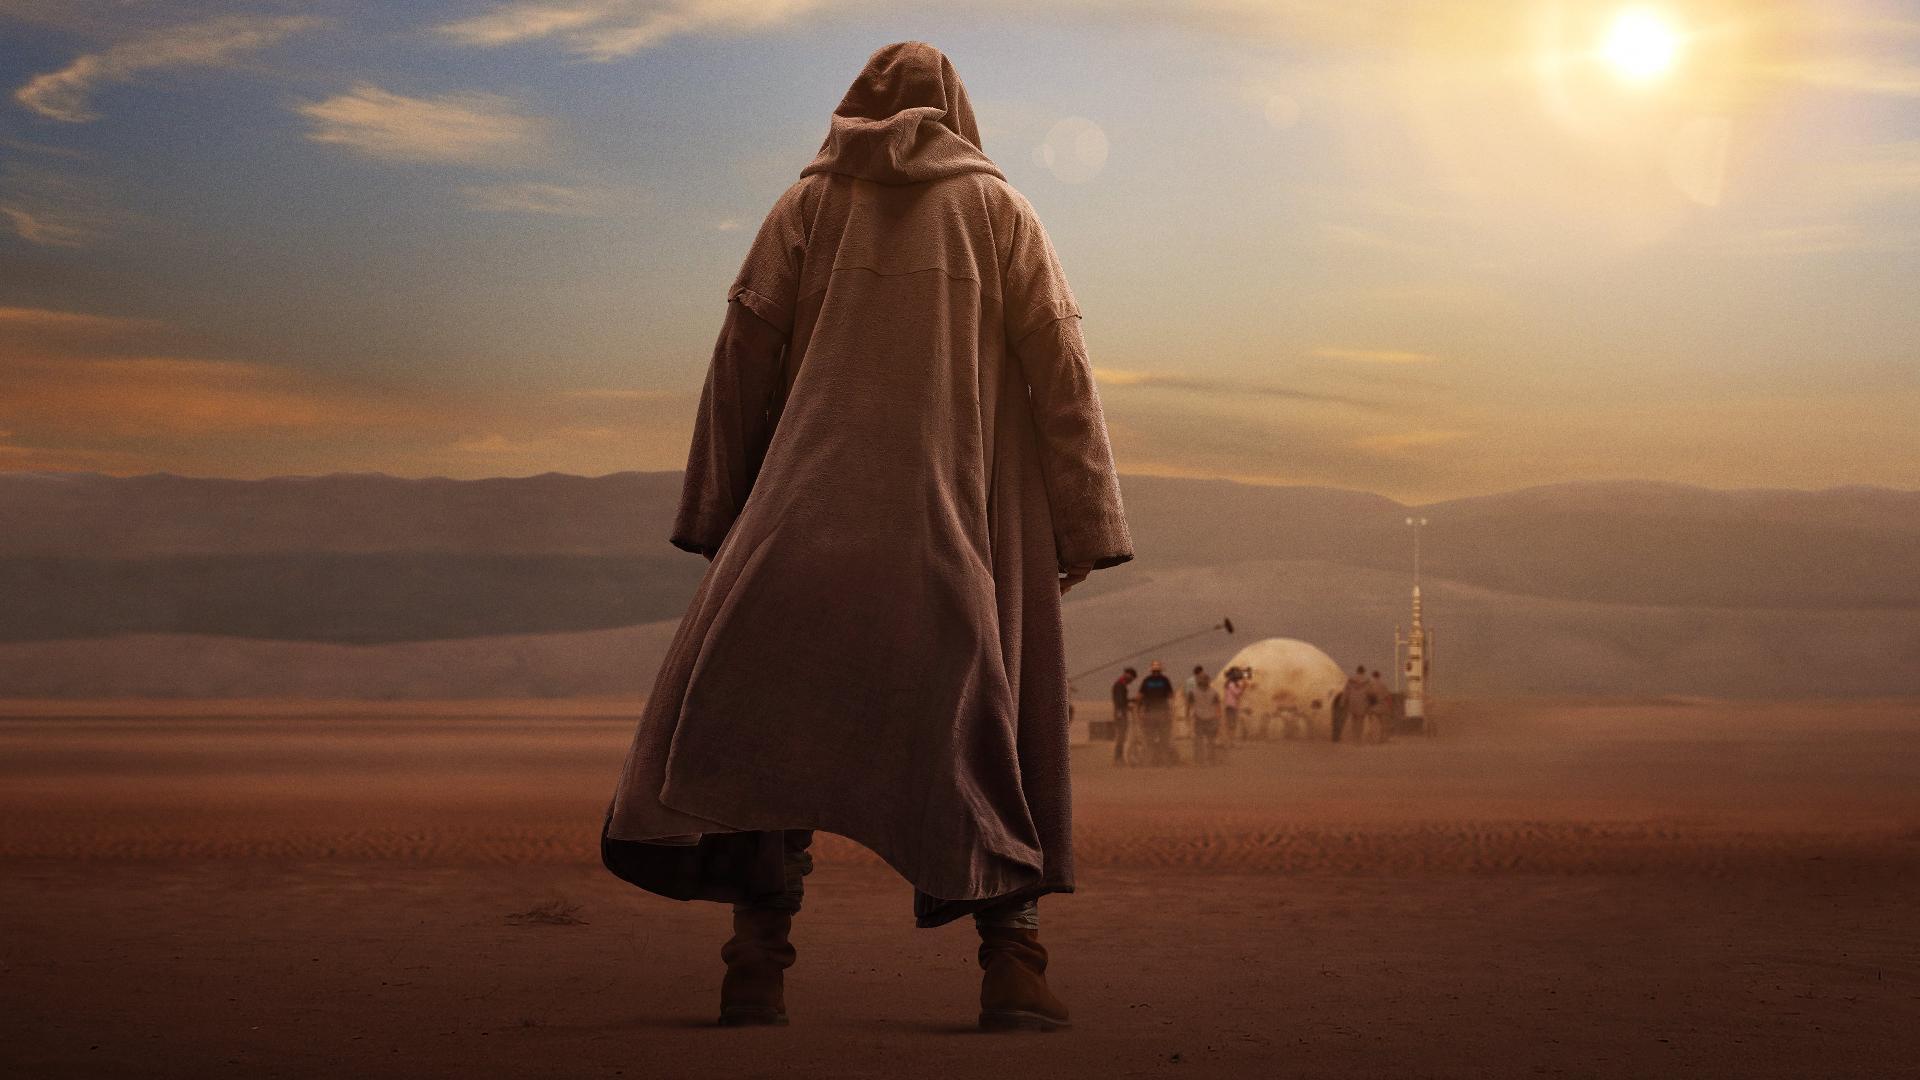 Obi-Wan Kenobi: A Jedi's Return / Оби-Ван Кеноби: Возвращение джедая